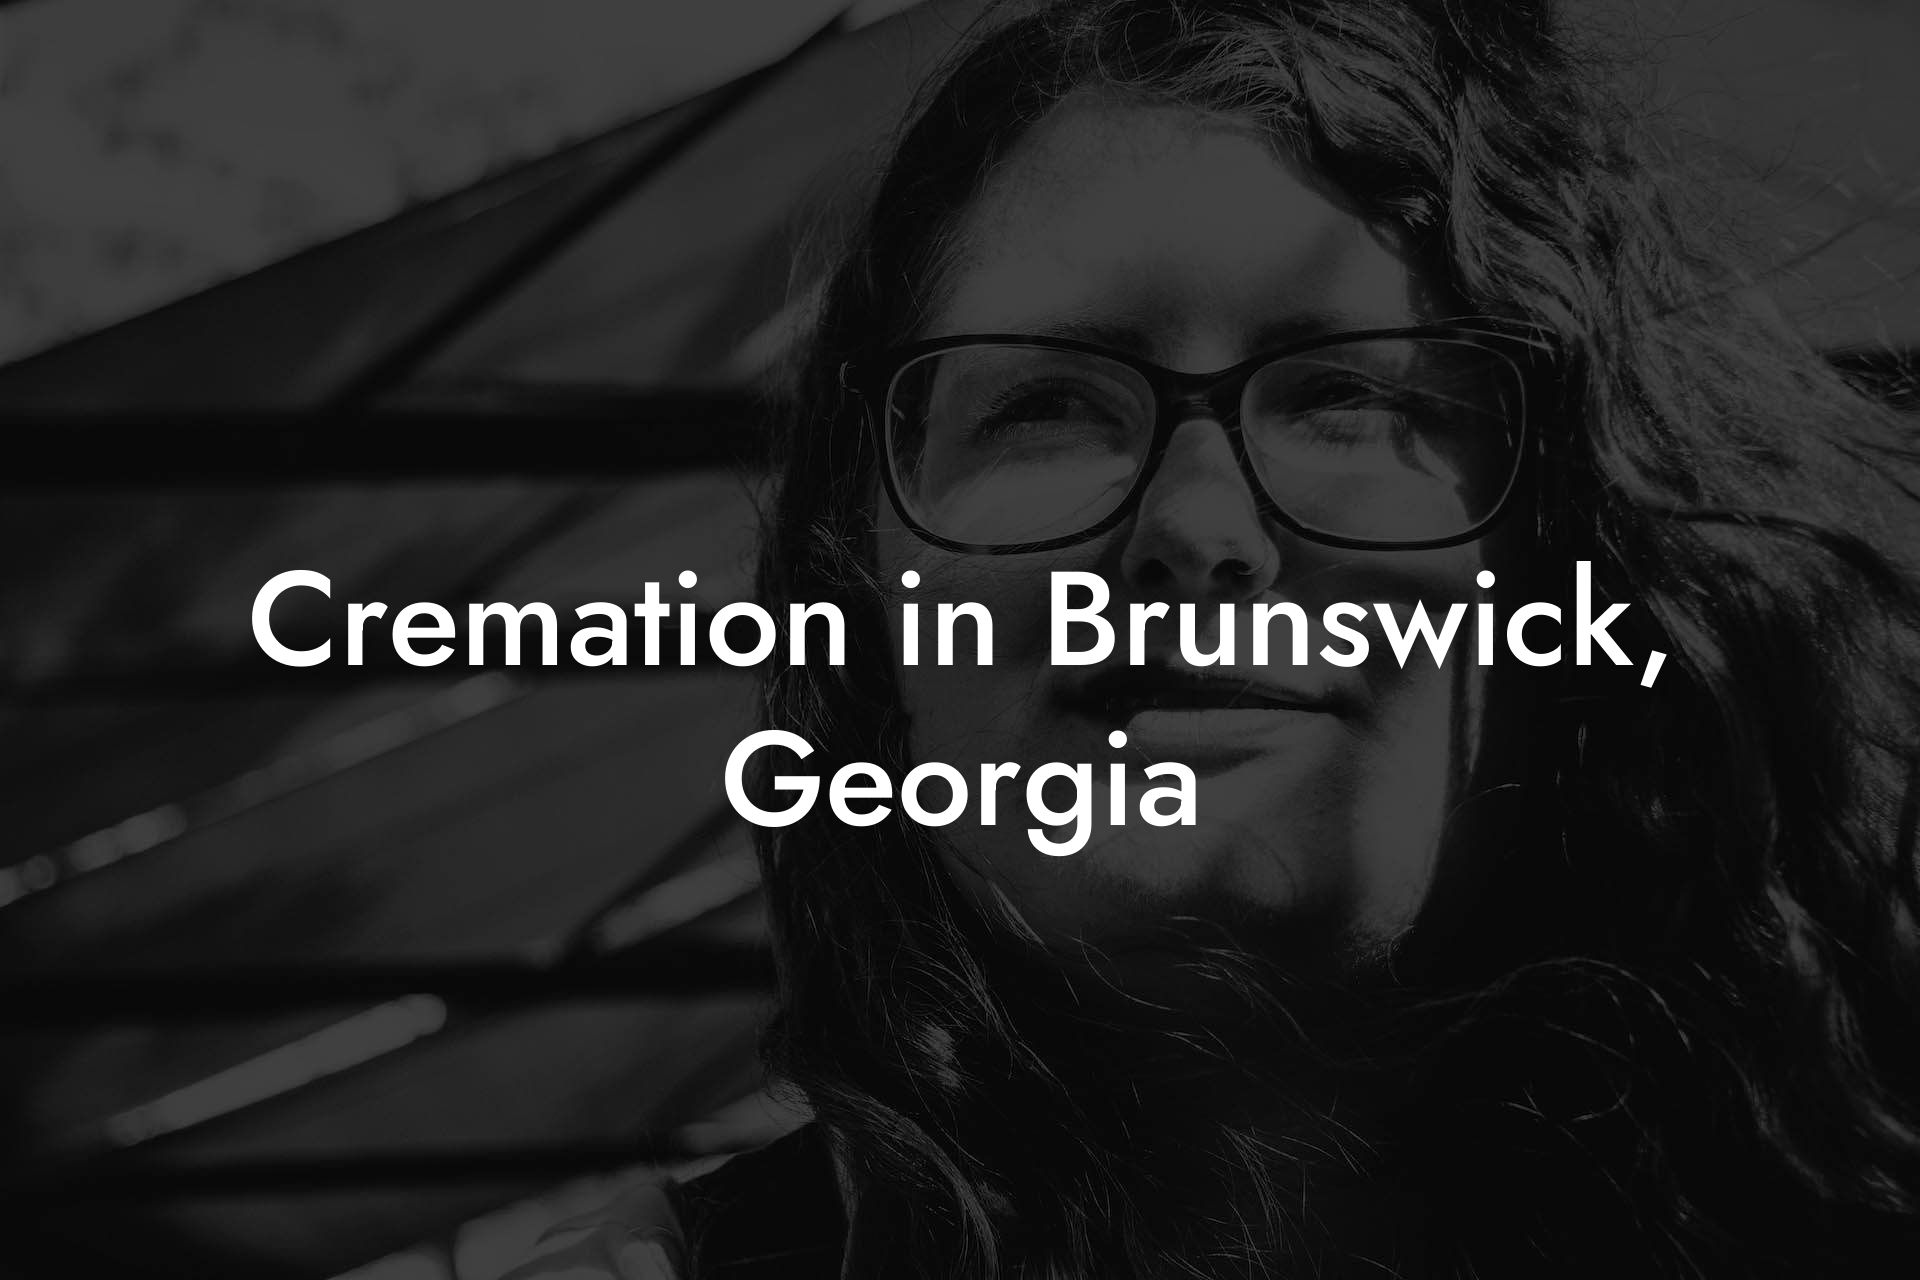 Cremation in Brunswick, Georgia